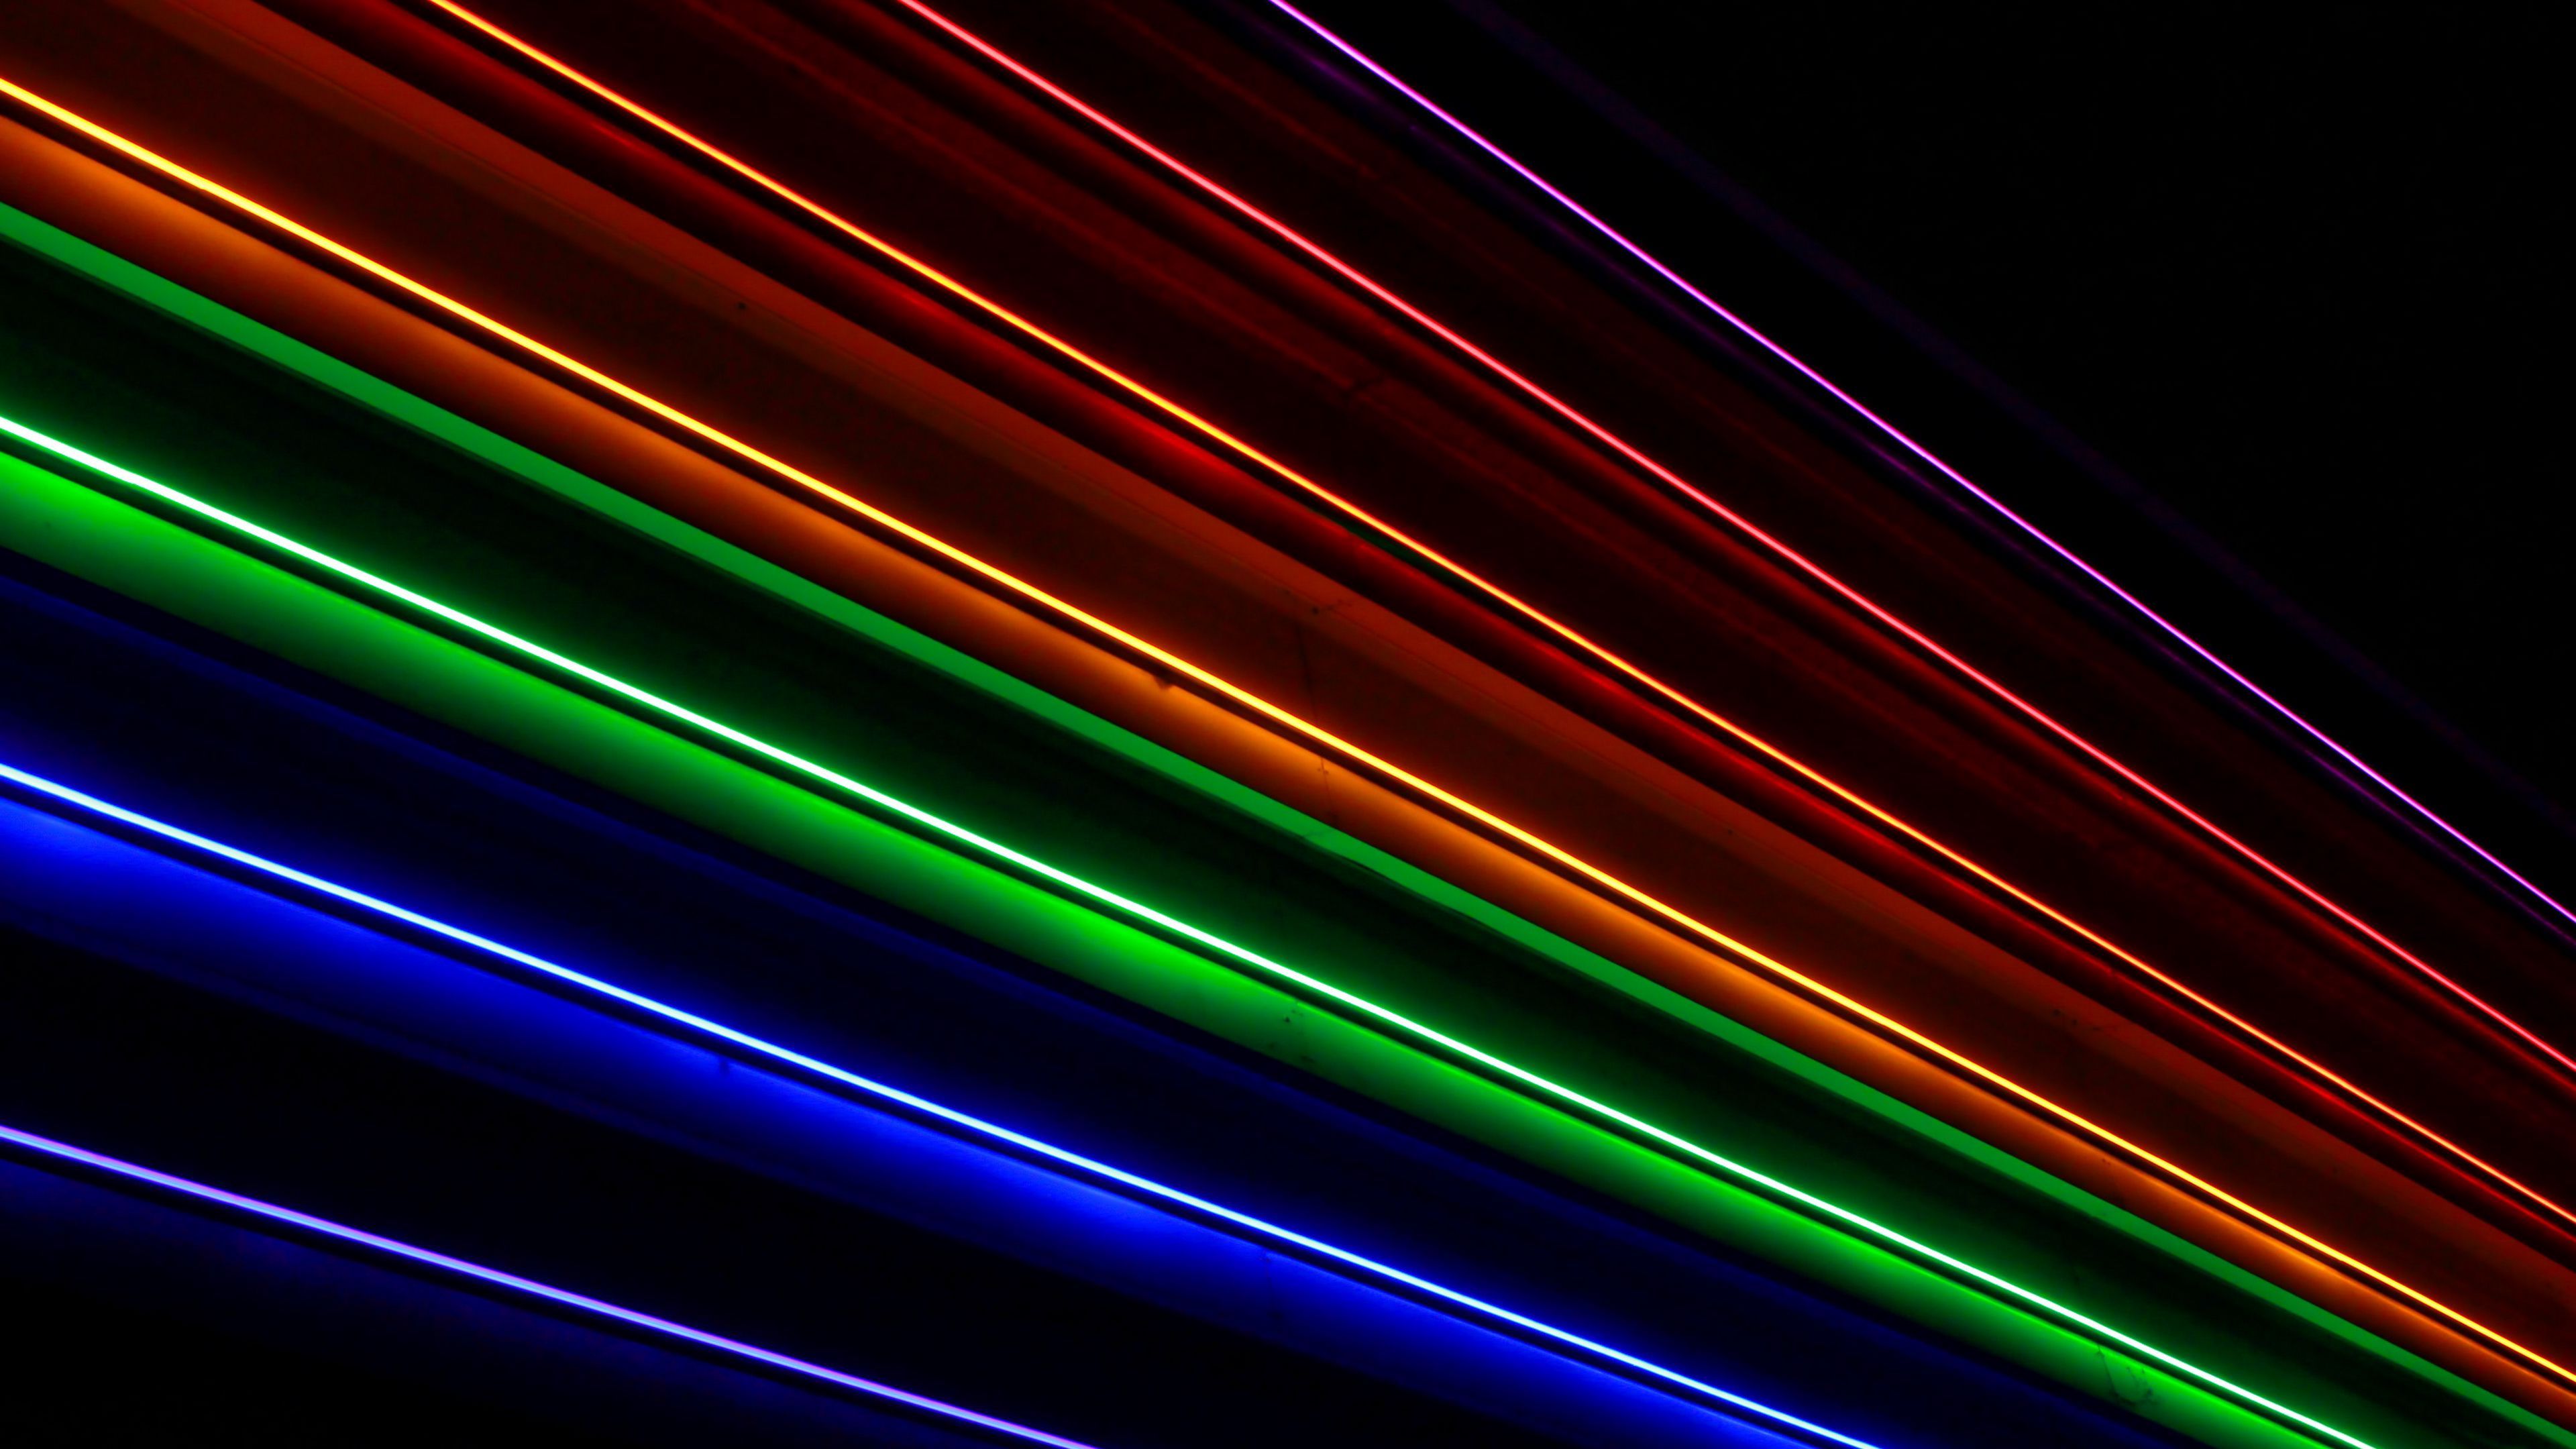 Download wallpaper 3840x2160 stripes, rainbow, neon, dark 4k uhd 16:9 HD background